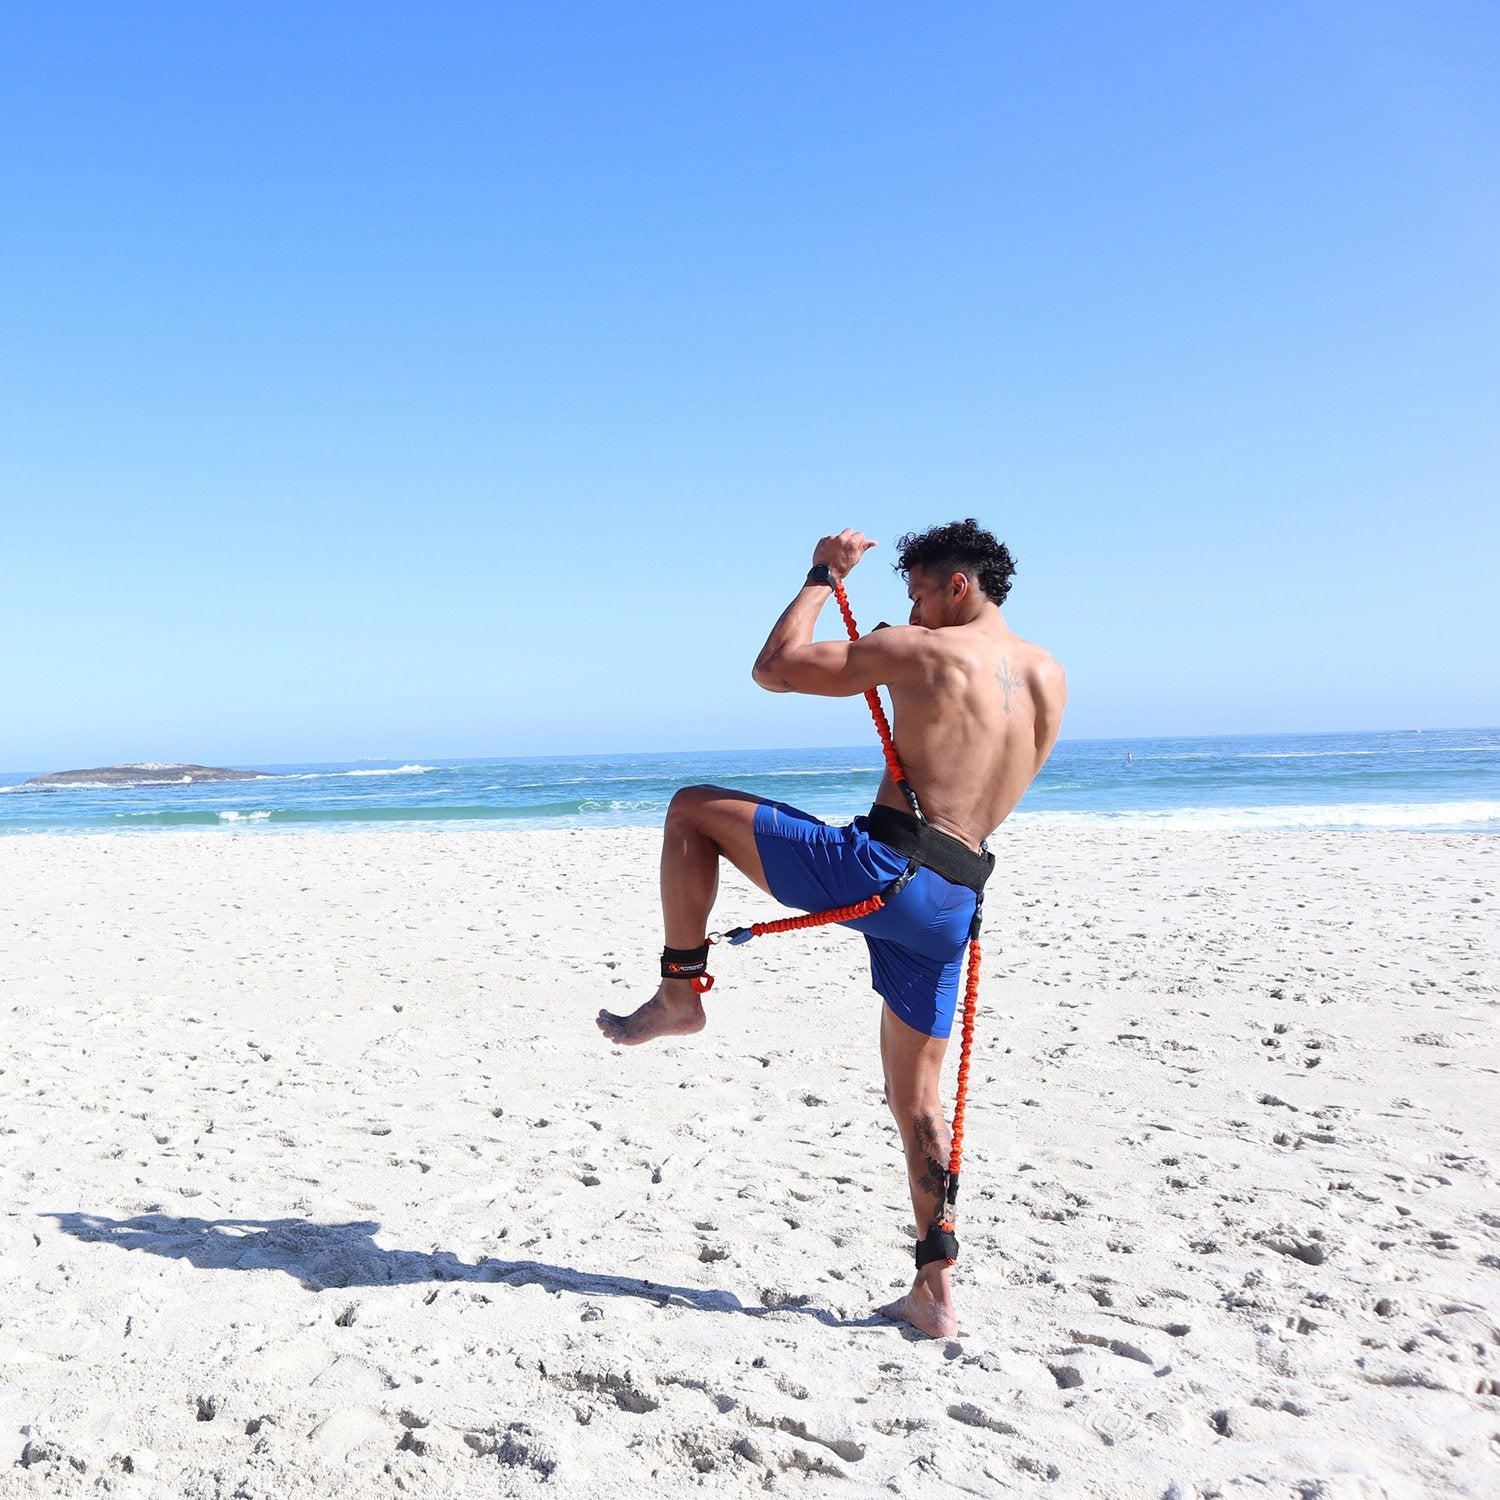 a man on a beach throwing a frisbee 